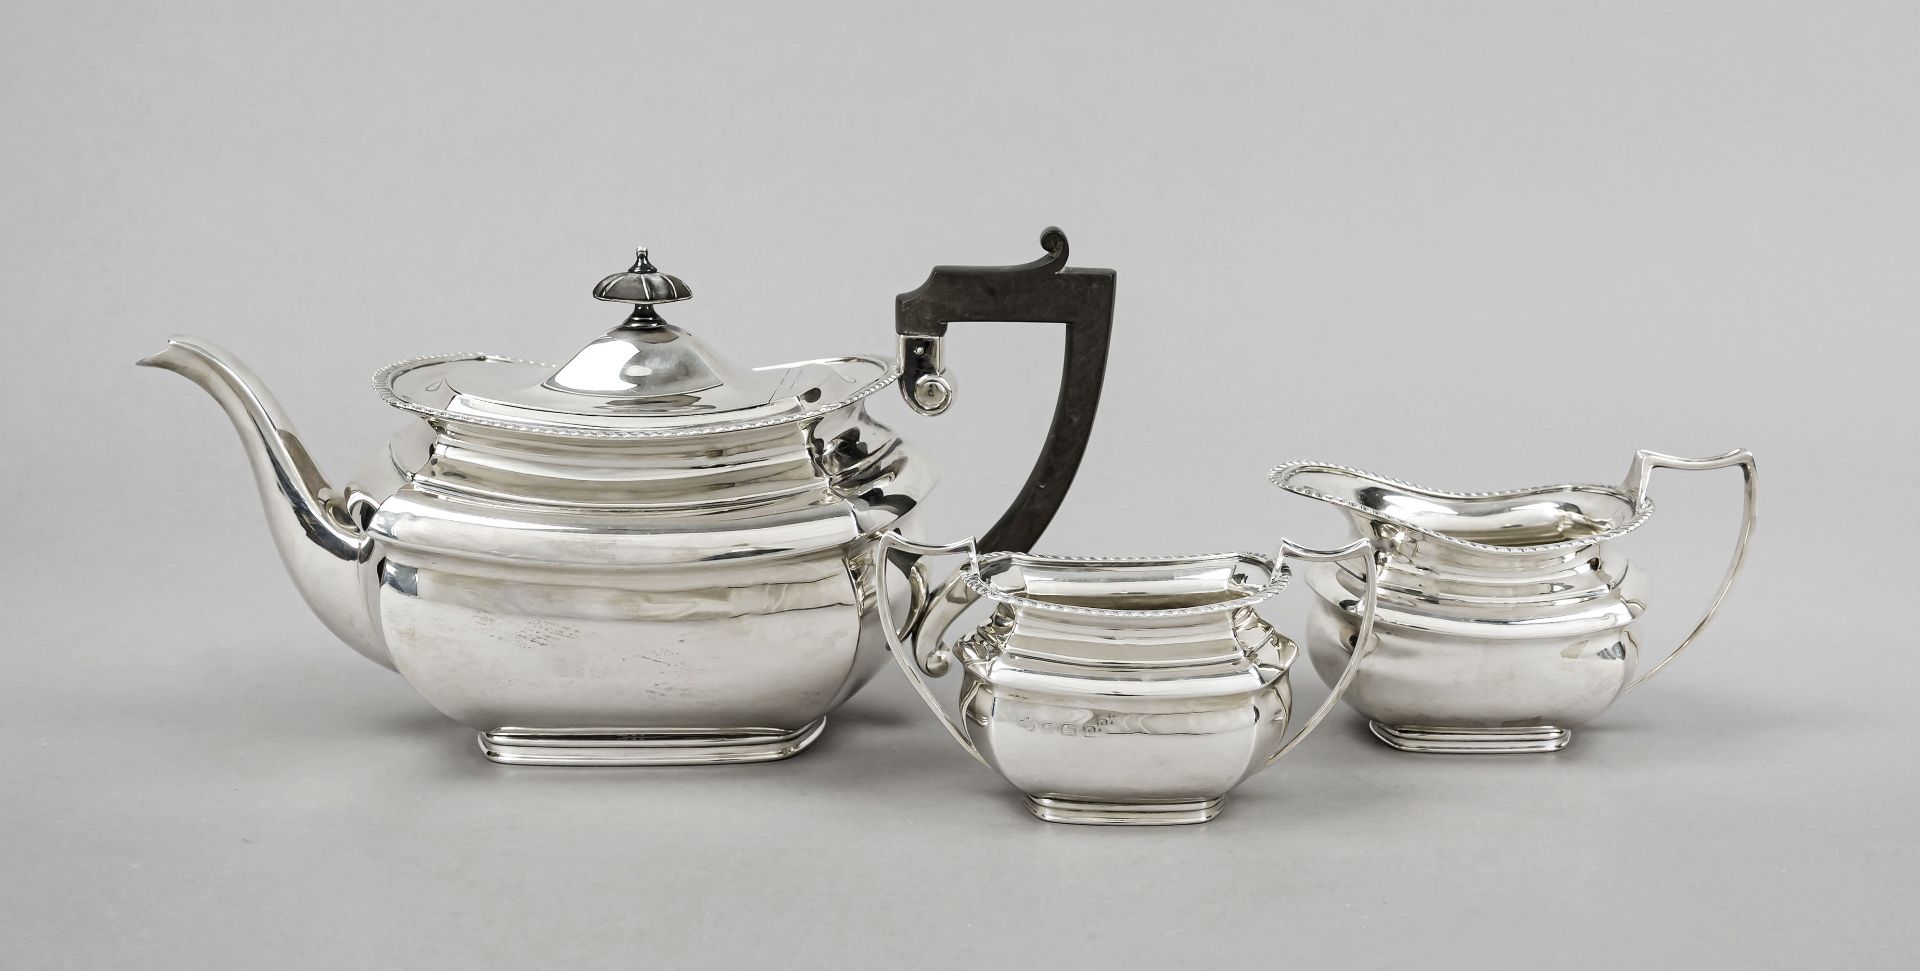 Three-piece tea set, England, 1912/13, maker's mark Elkington & Co. Ltd, Birmingham, sterling silver